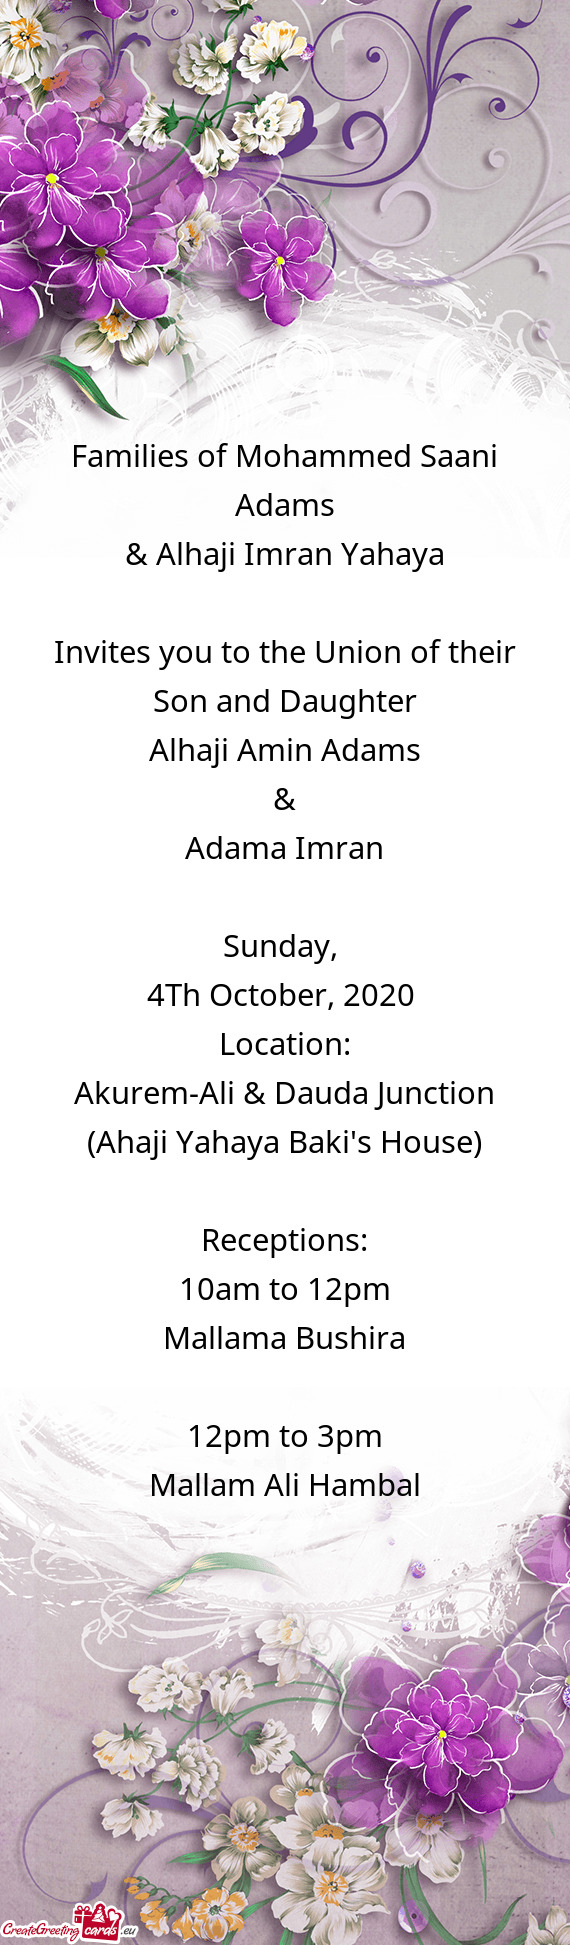 Families of Mohammed Saani Adams